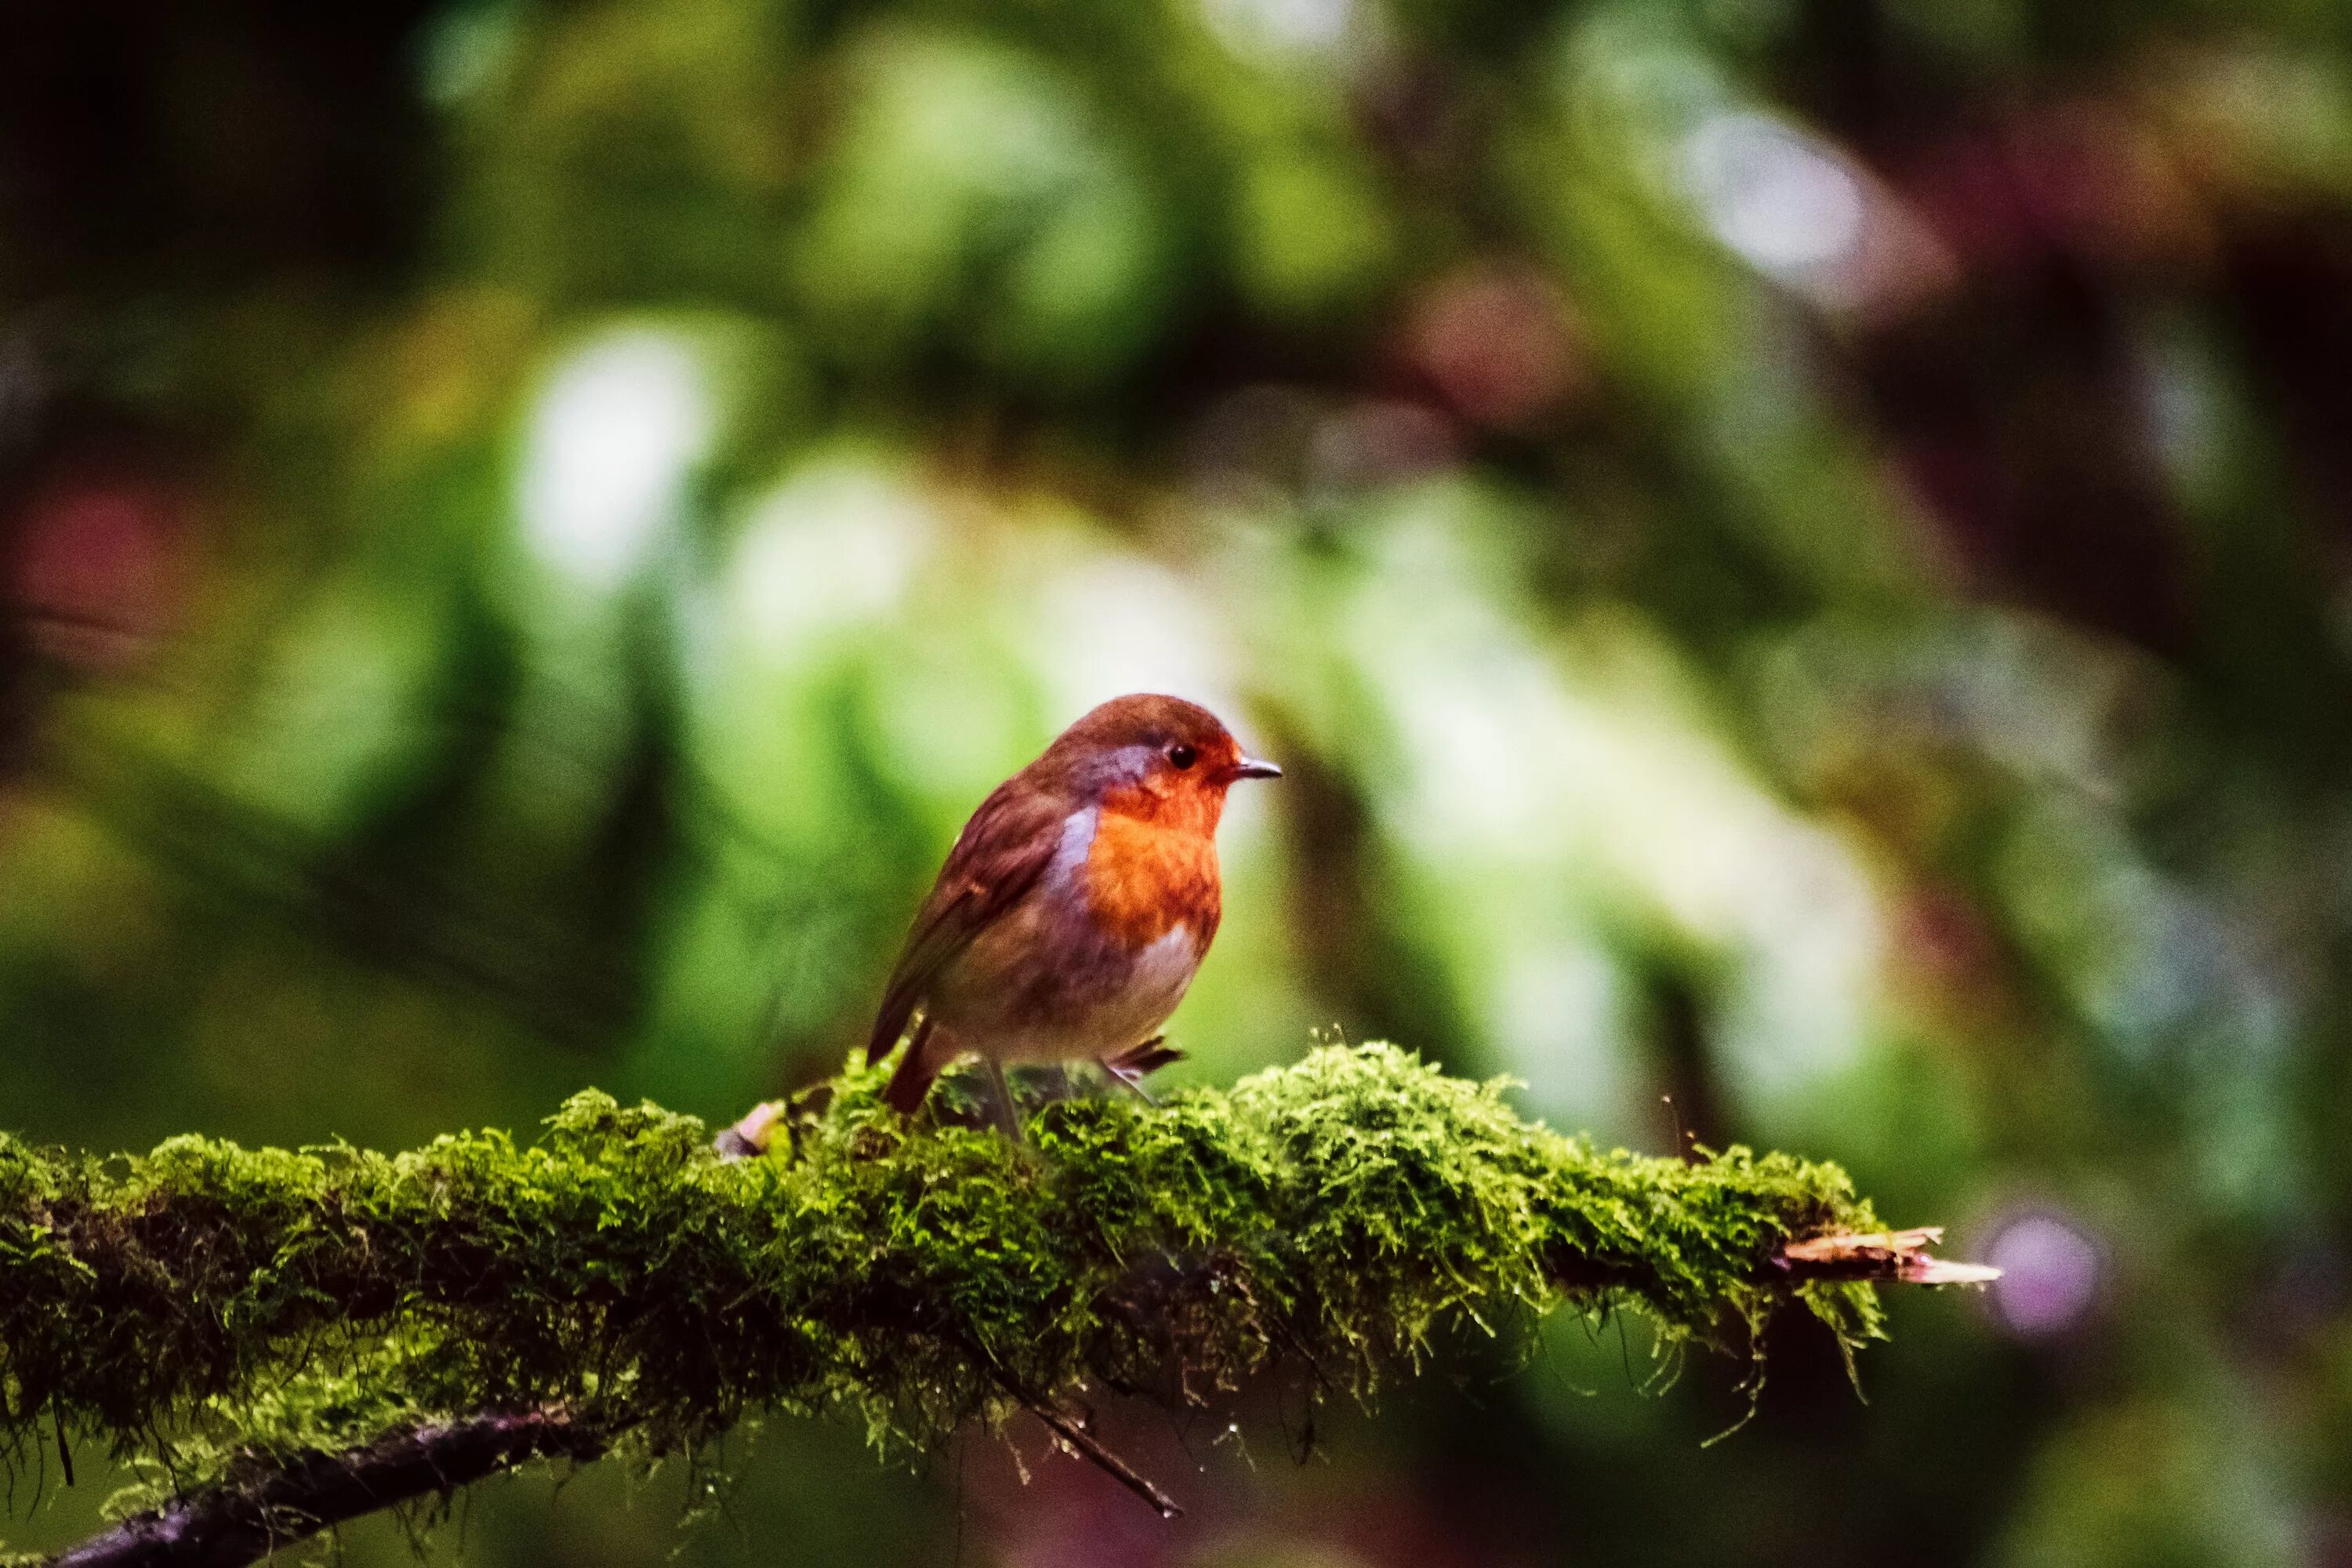 Звук птиц медитация. Природа птицы. Природа лес птицы. Пение птиц в лесу. Звуки природы пение птиц.